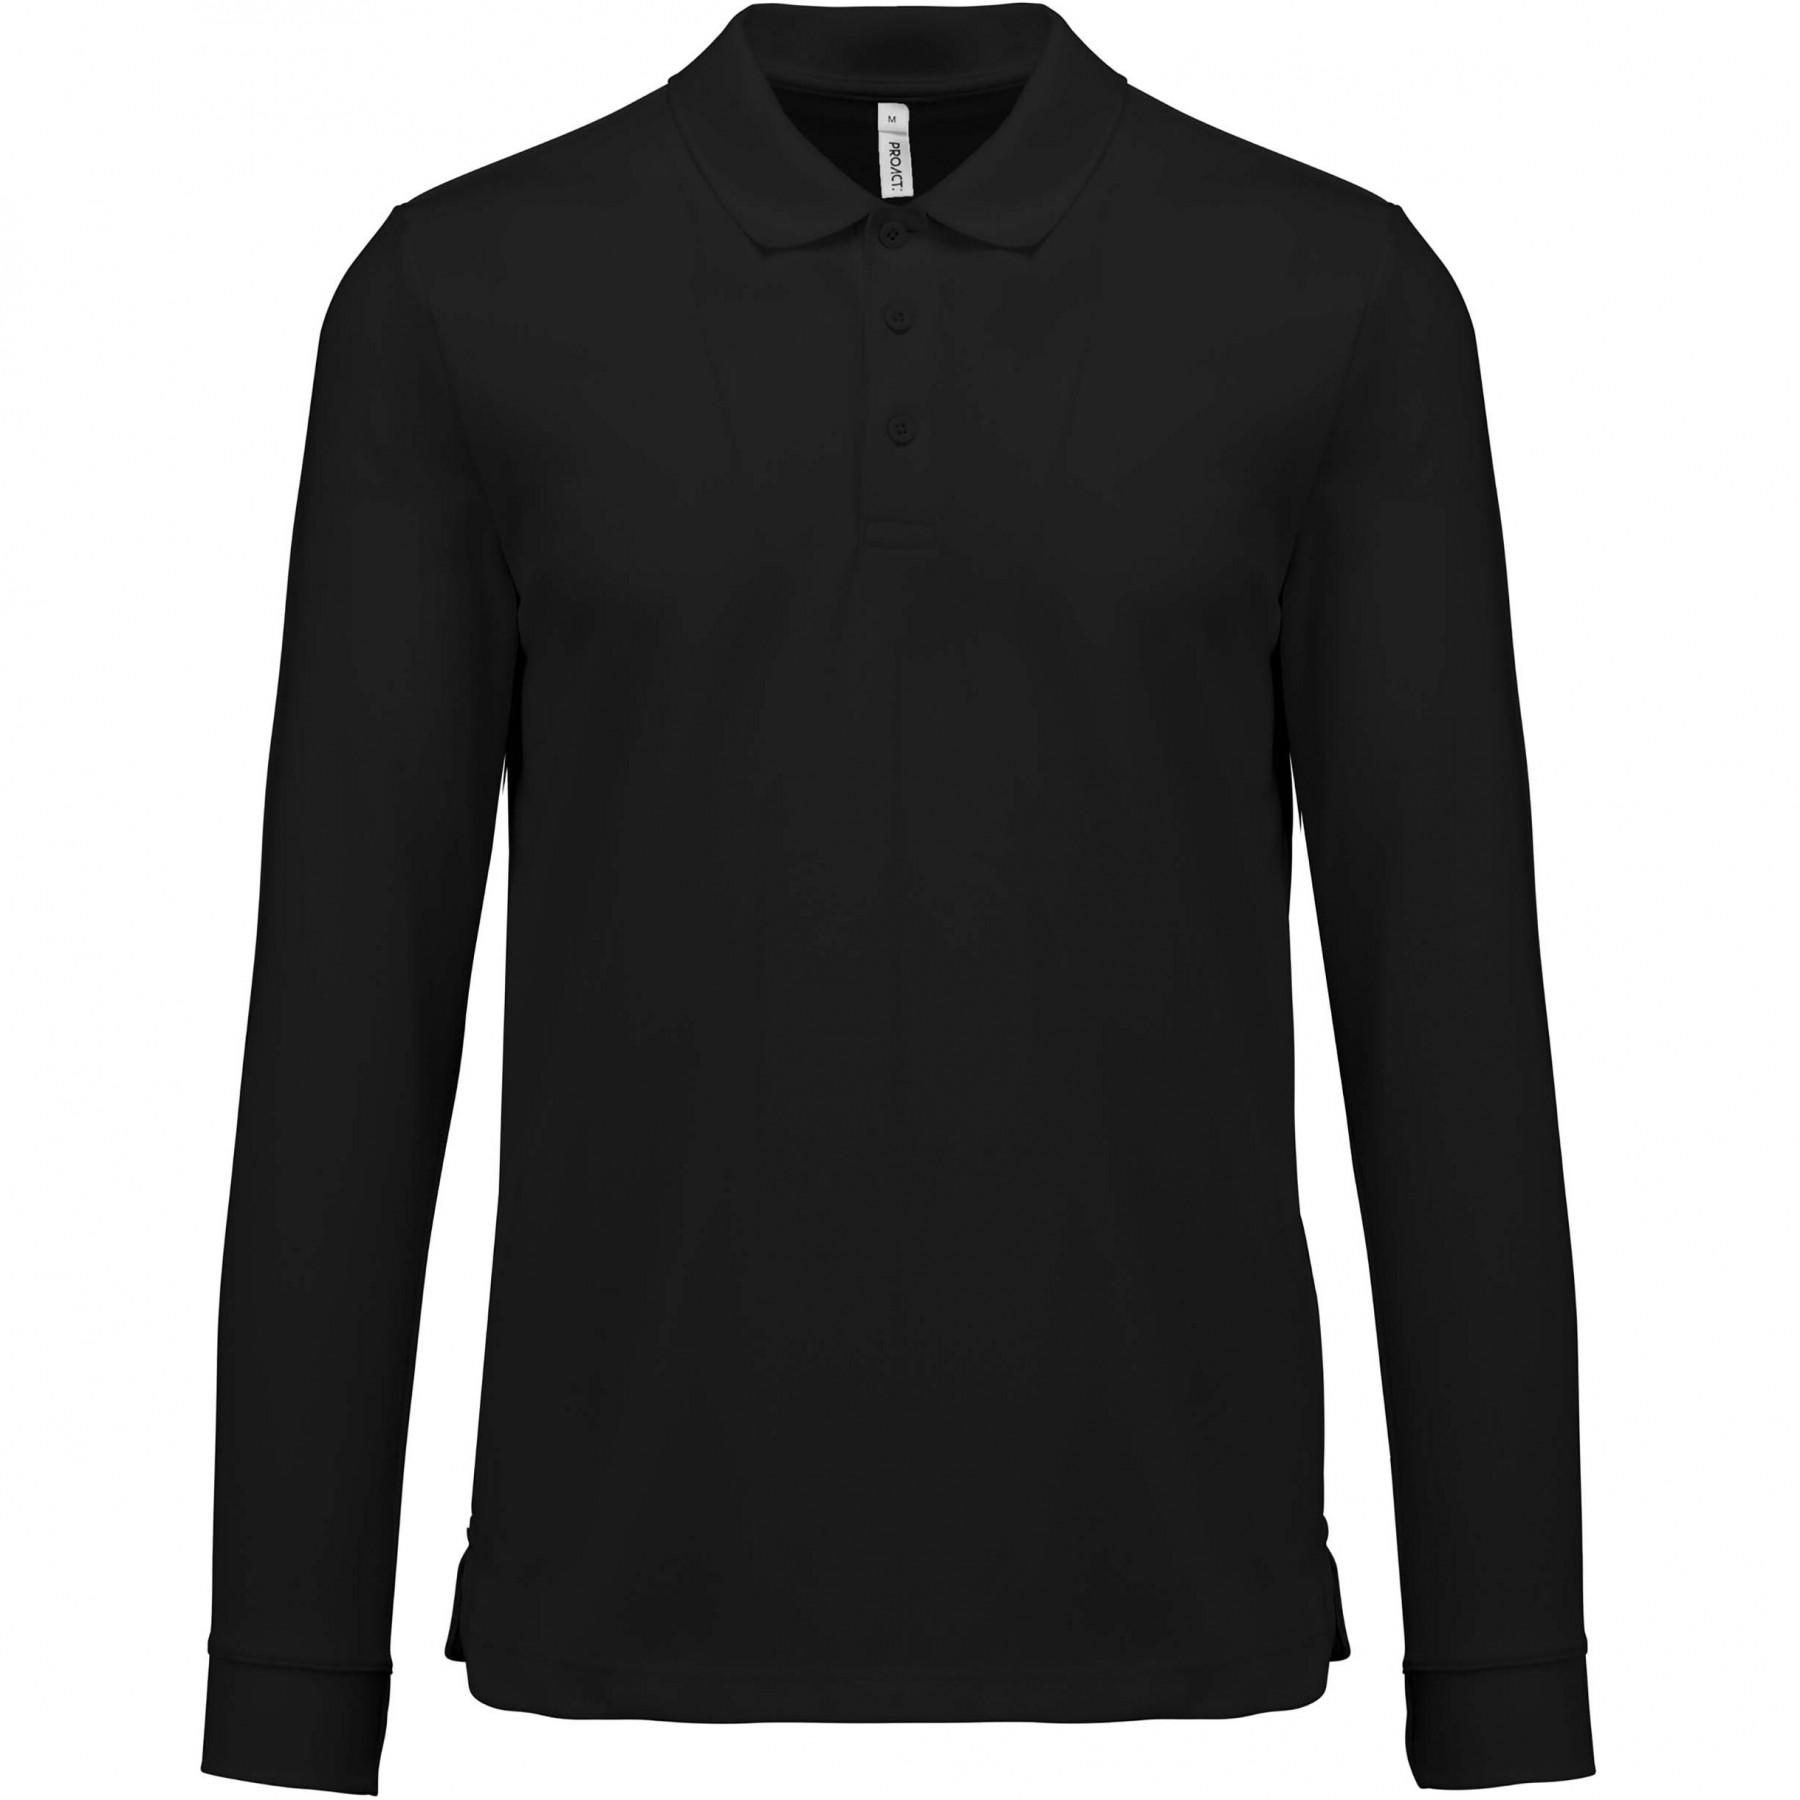 Poract Cool Plus Long Sleeve Polo Shirt